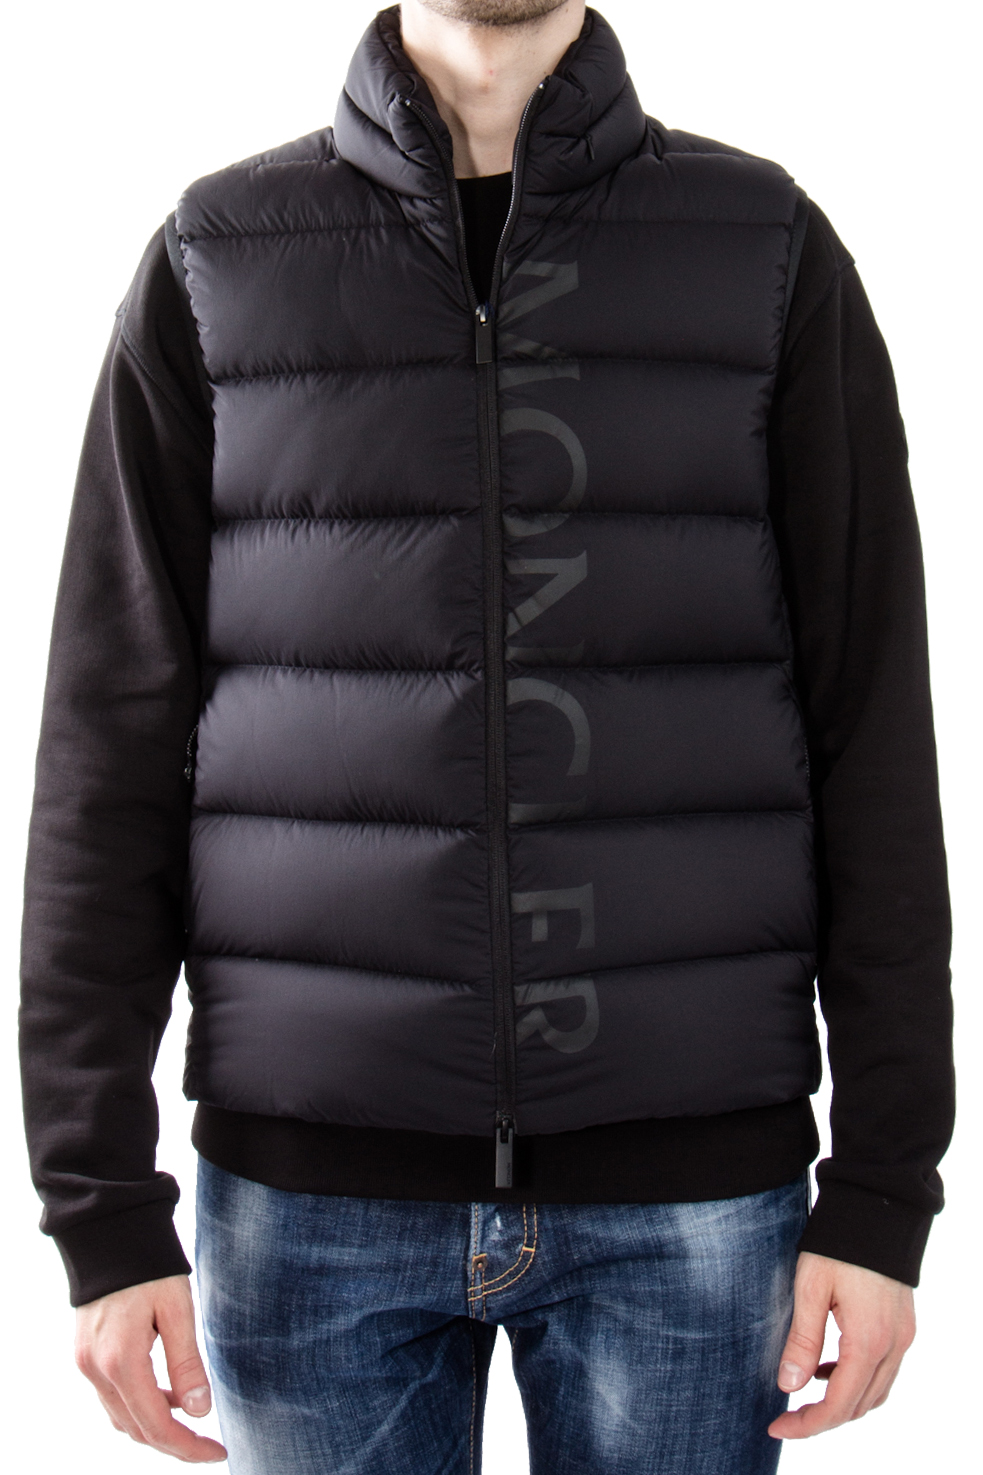 MONCLER PEYRE LOGO PRINT VEST | Vests | Jackets & Coats | Clothing ...